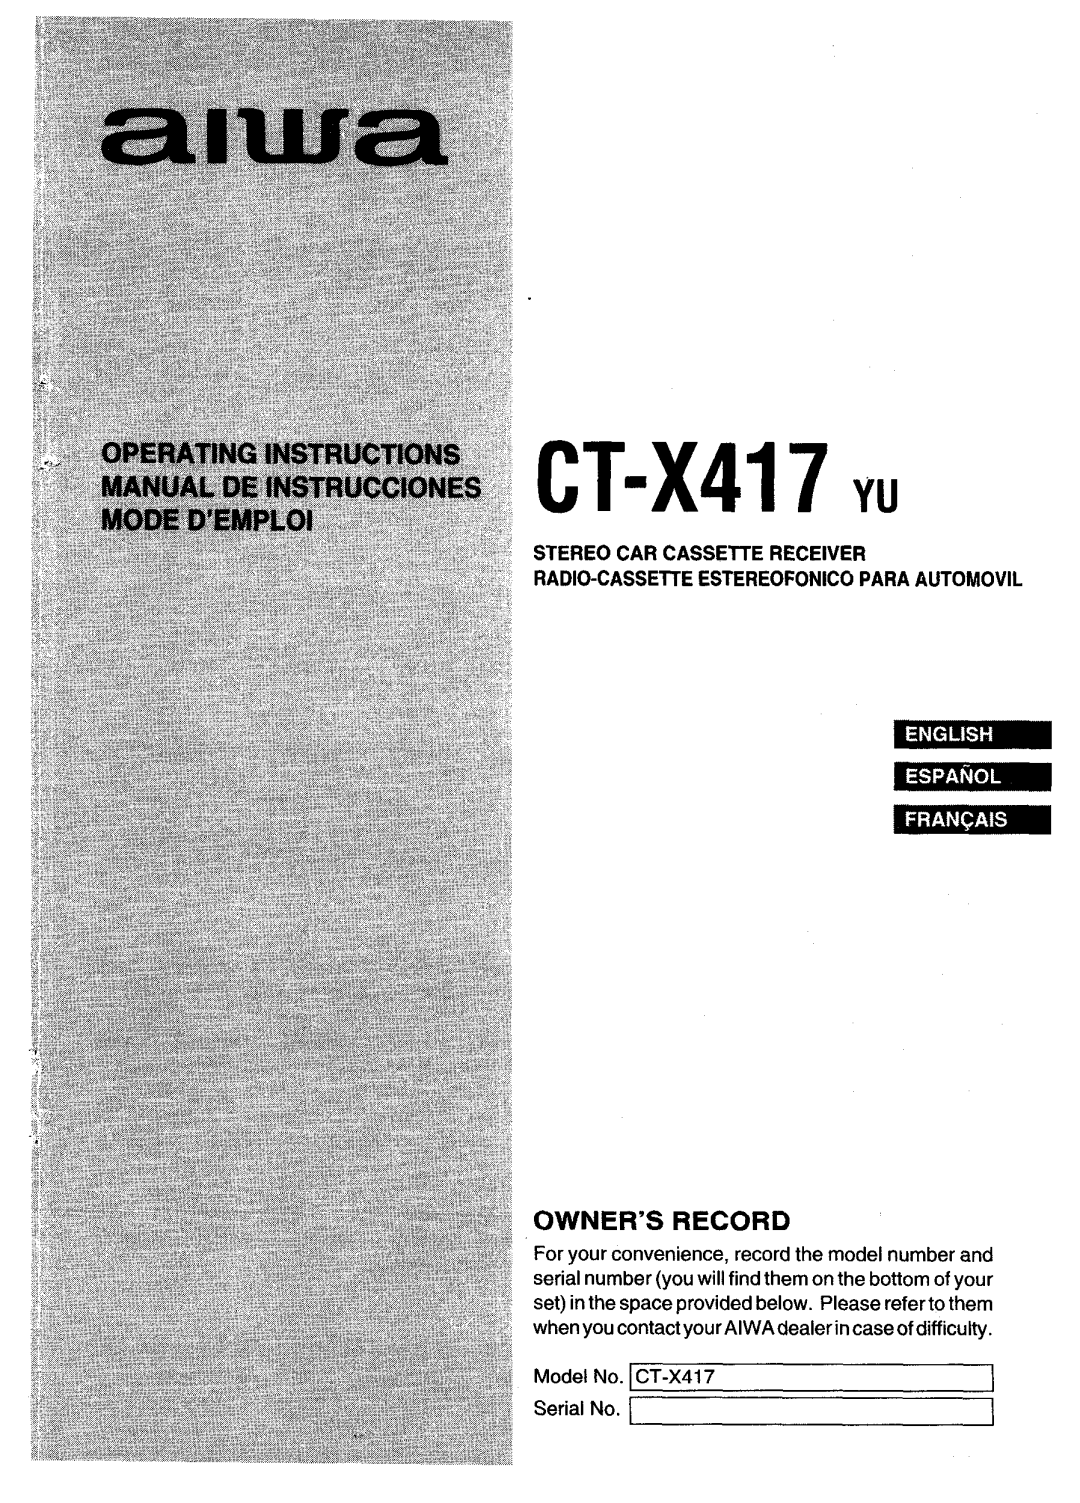 Aiwa manual CT-X417 w, OWNER’S Record 